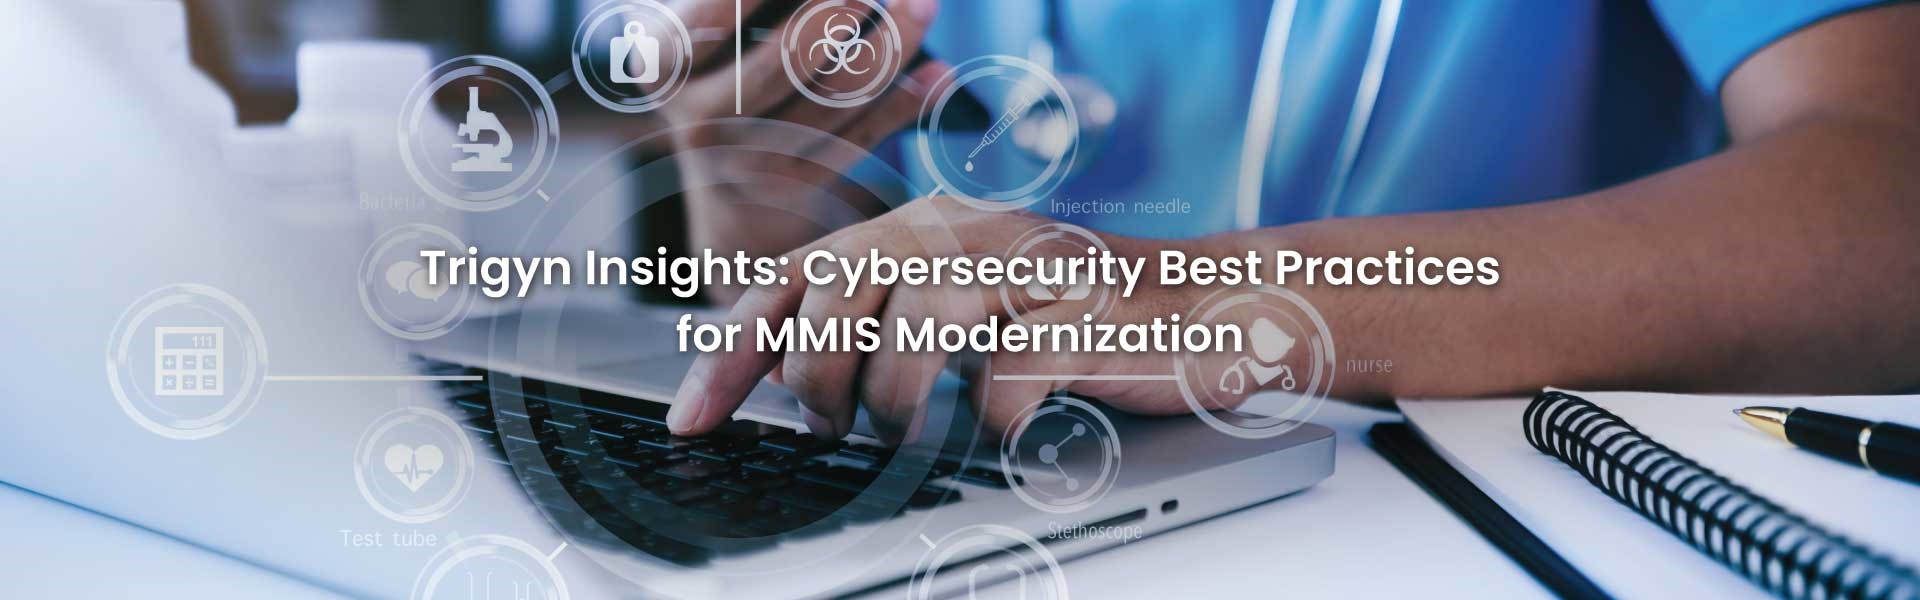 Cybersecurity and MMIS Modernization